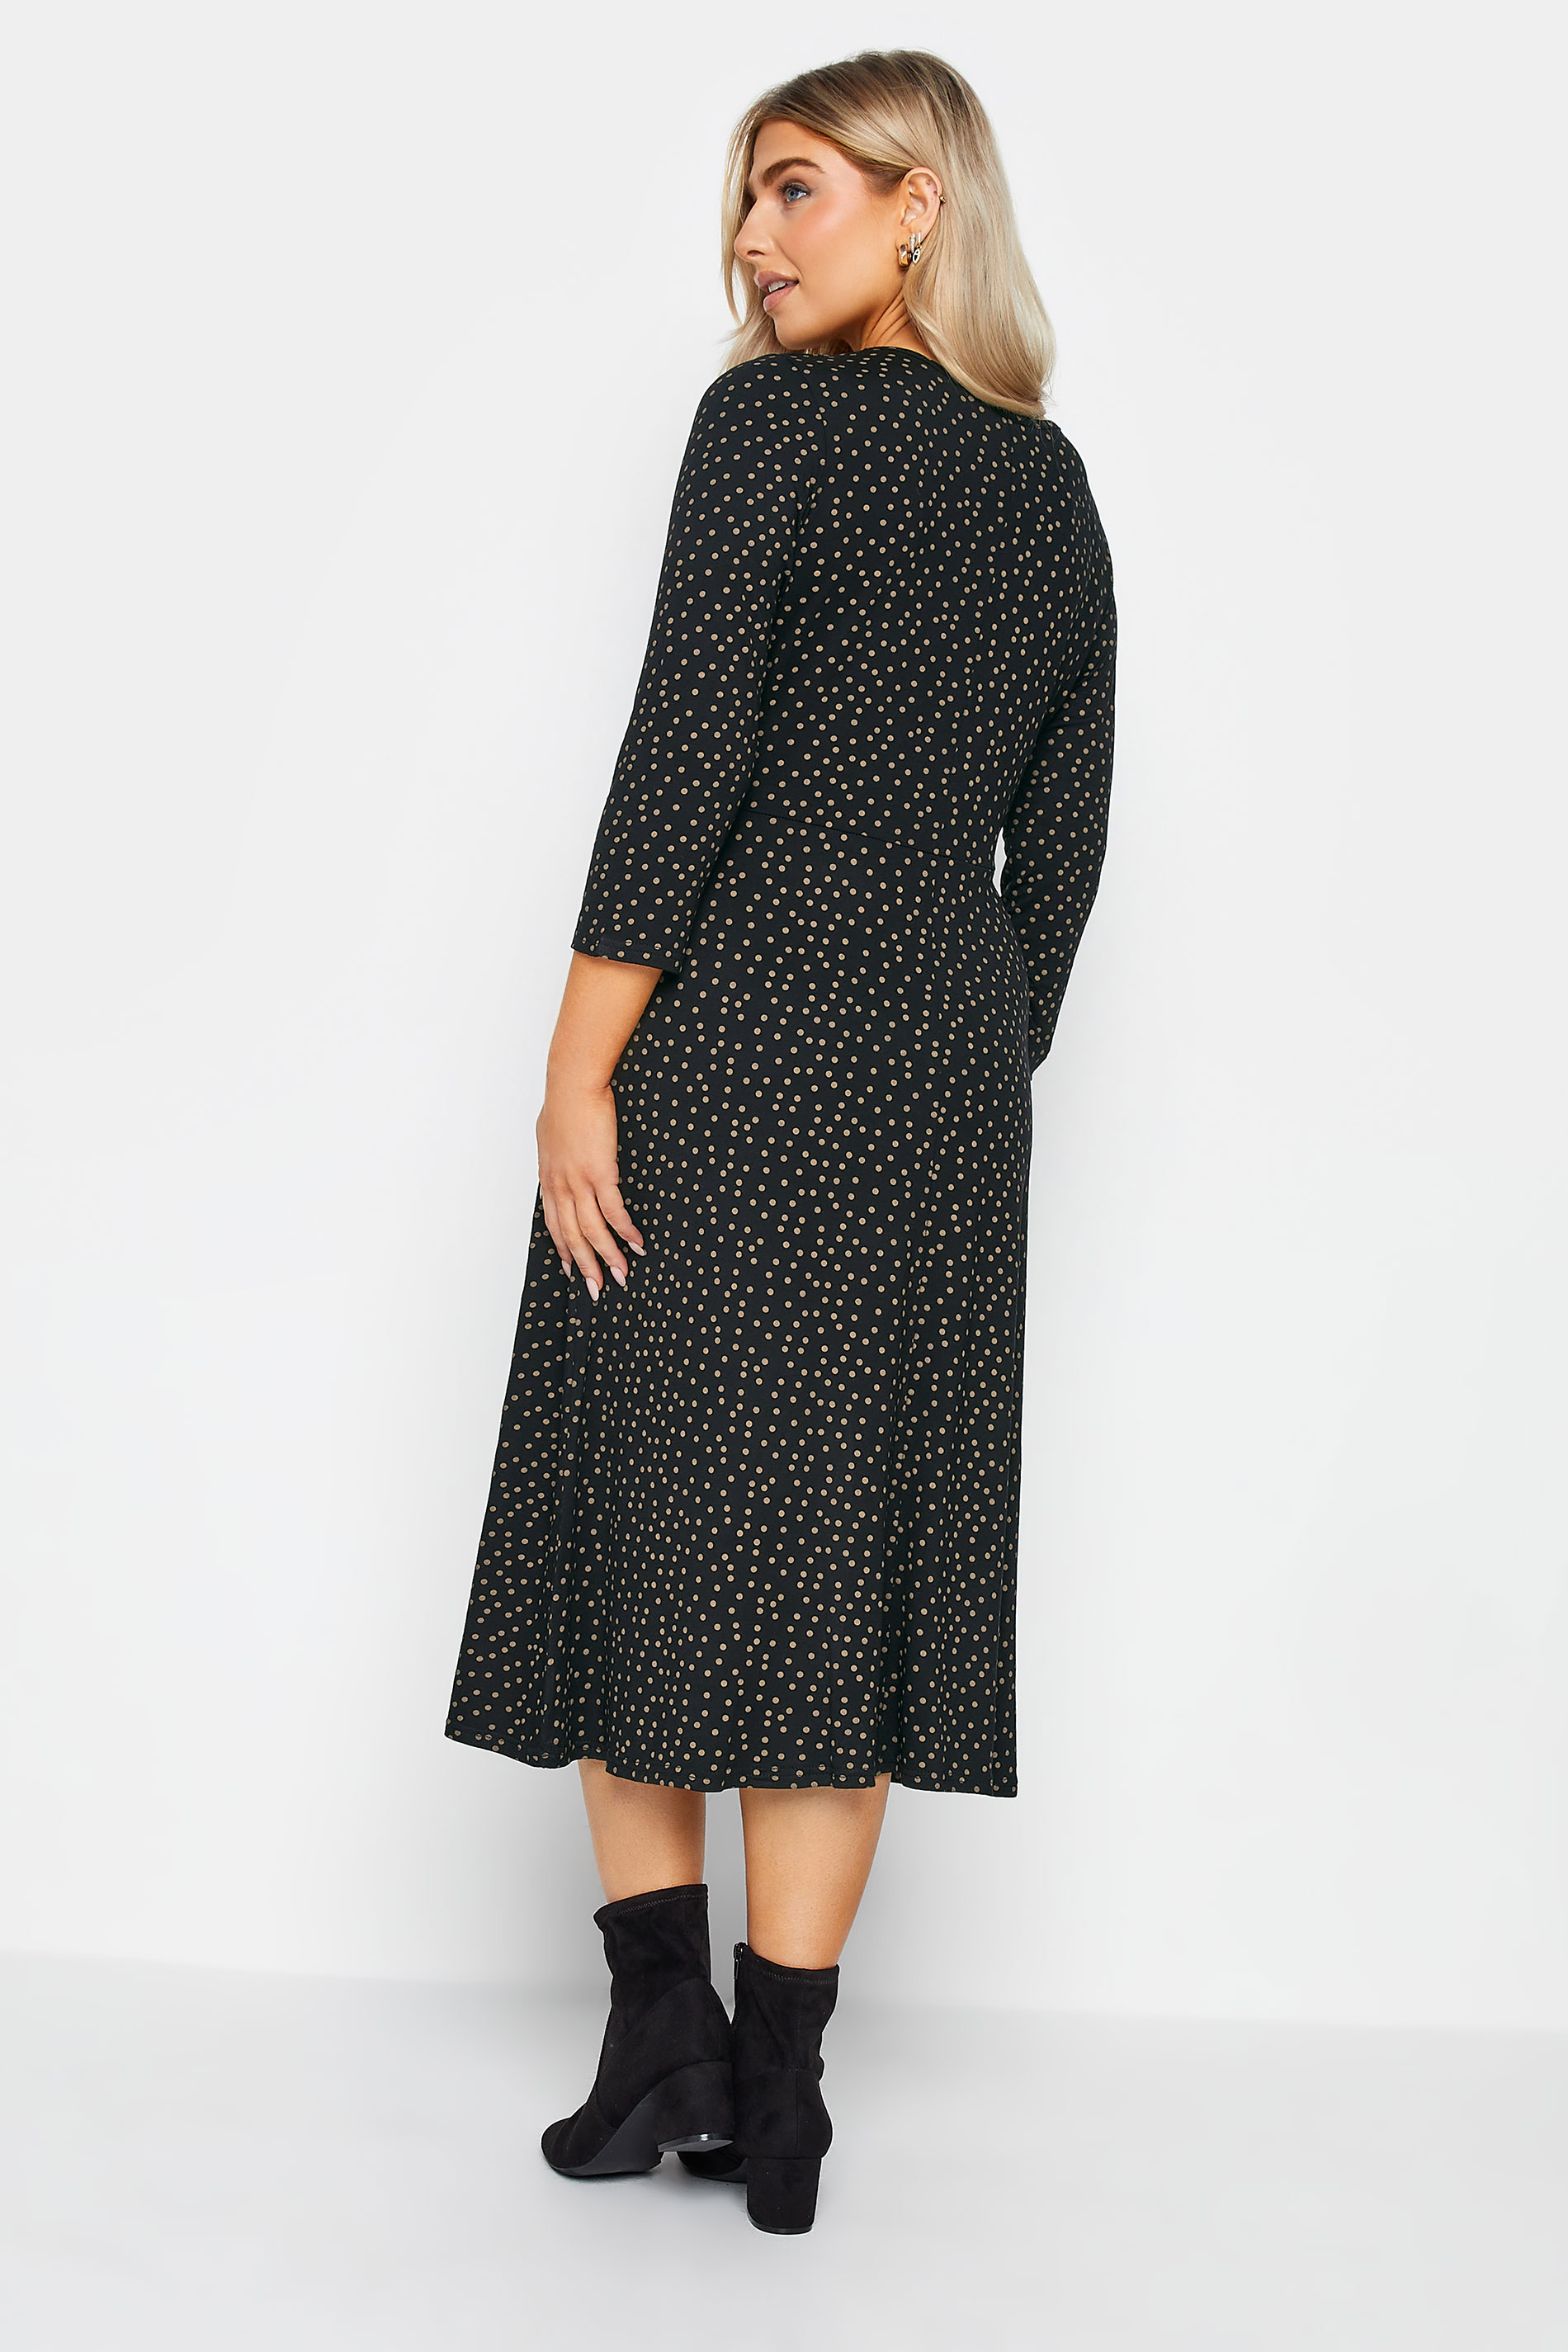 M&Co Black & Mocha Spot Print Midi Dress | M&Co 3